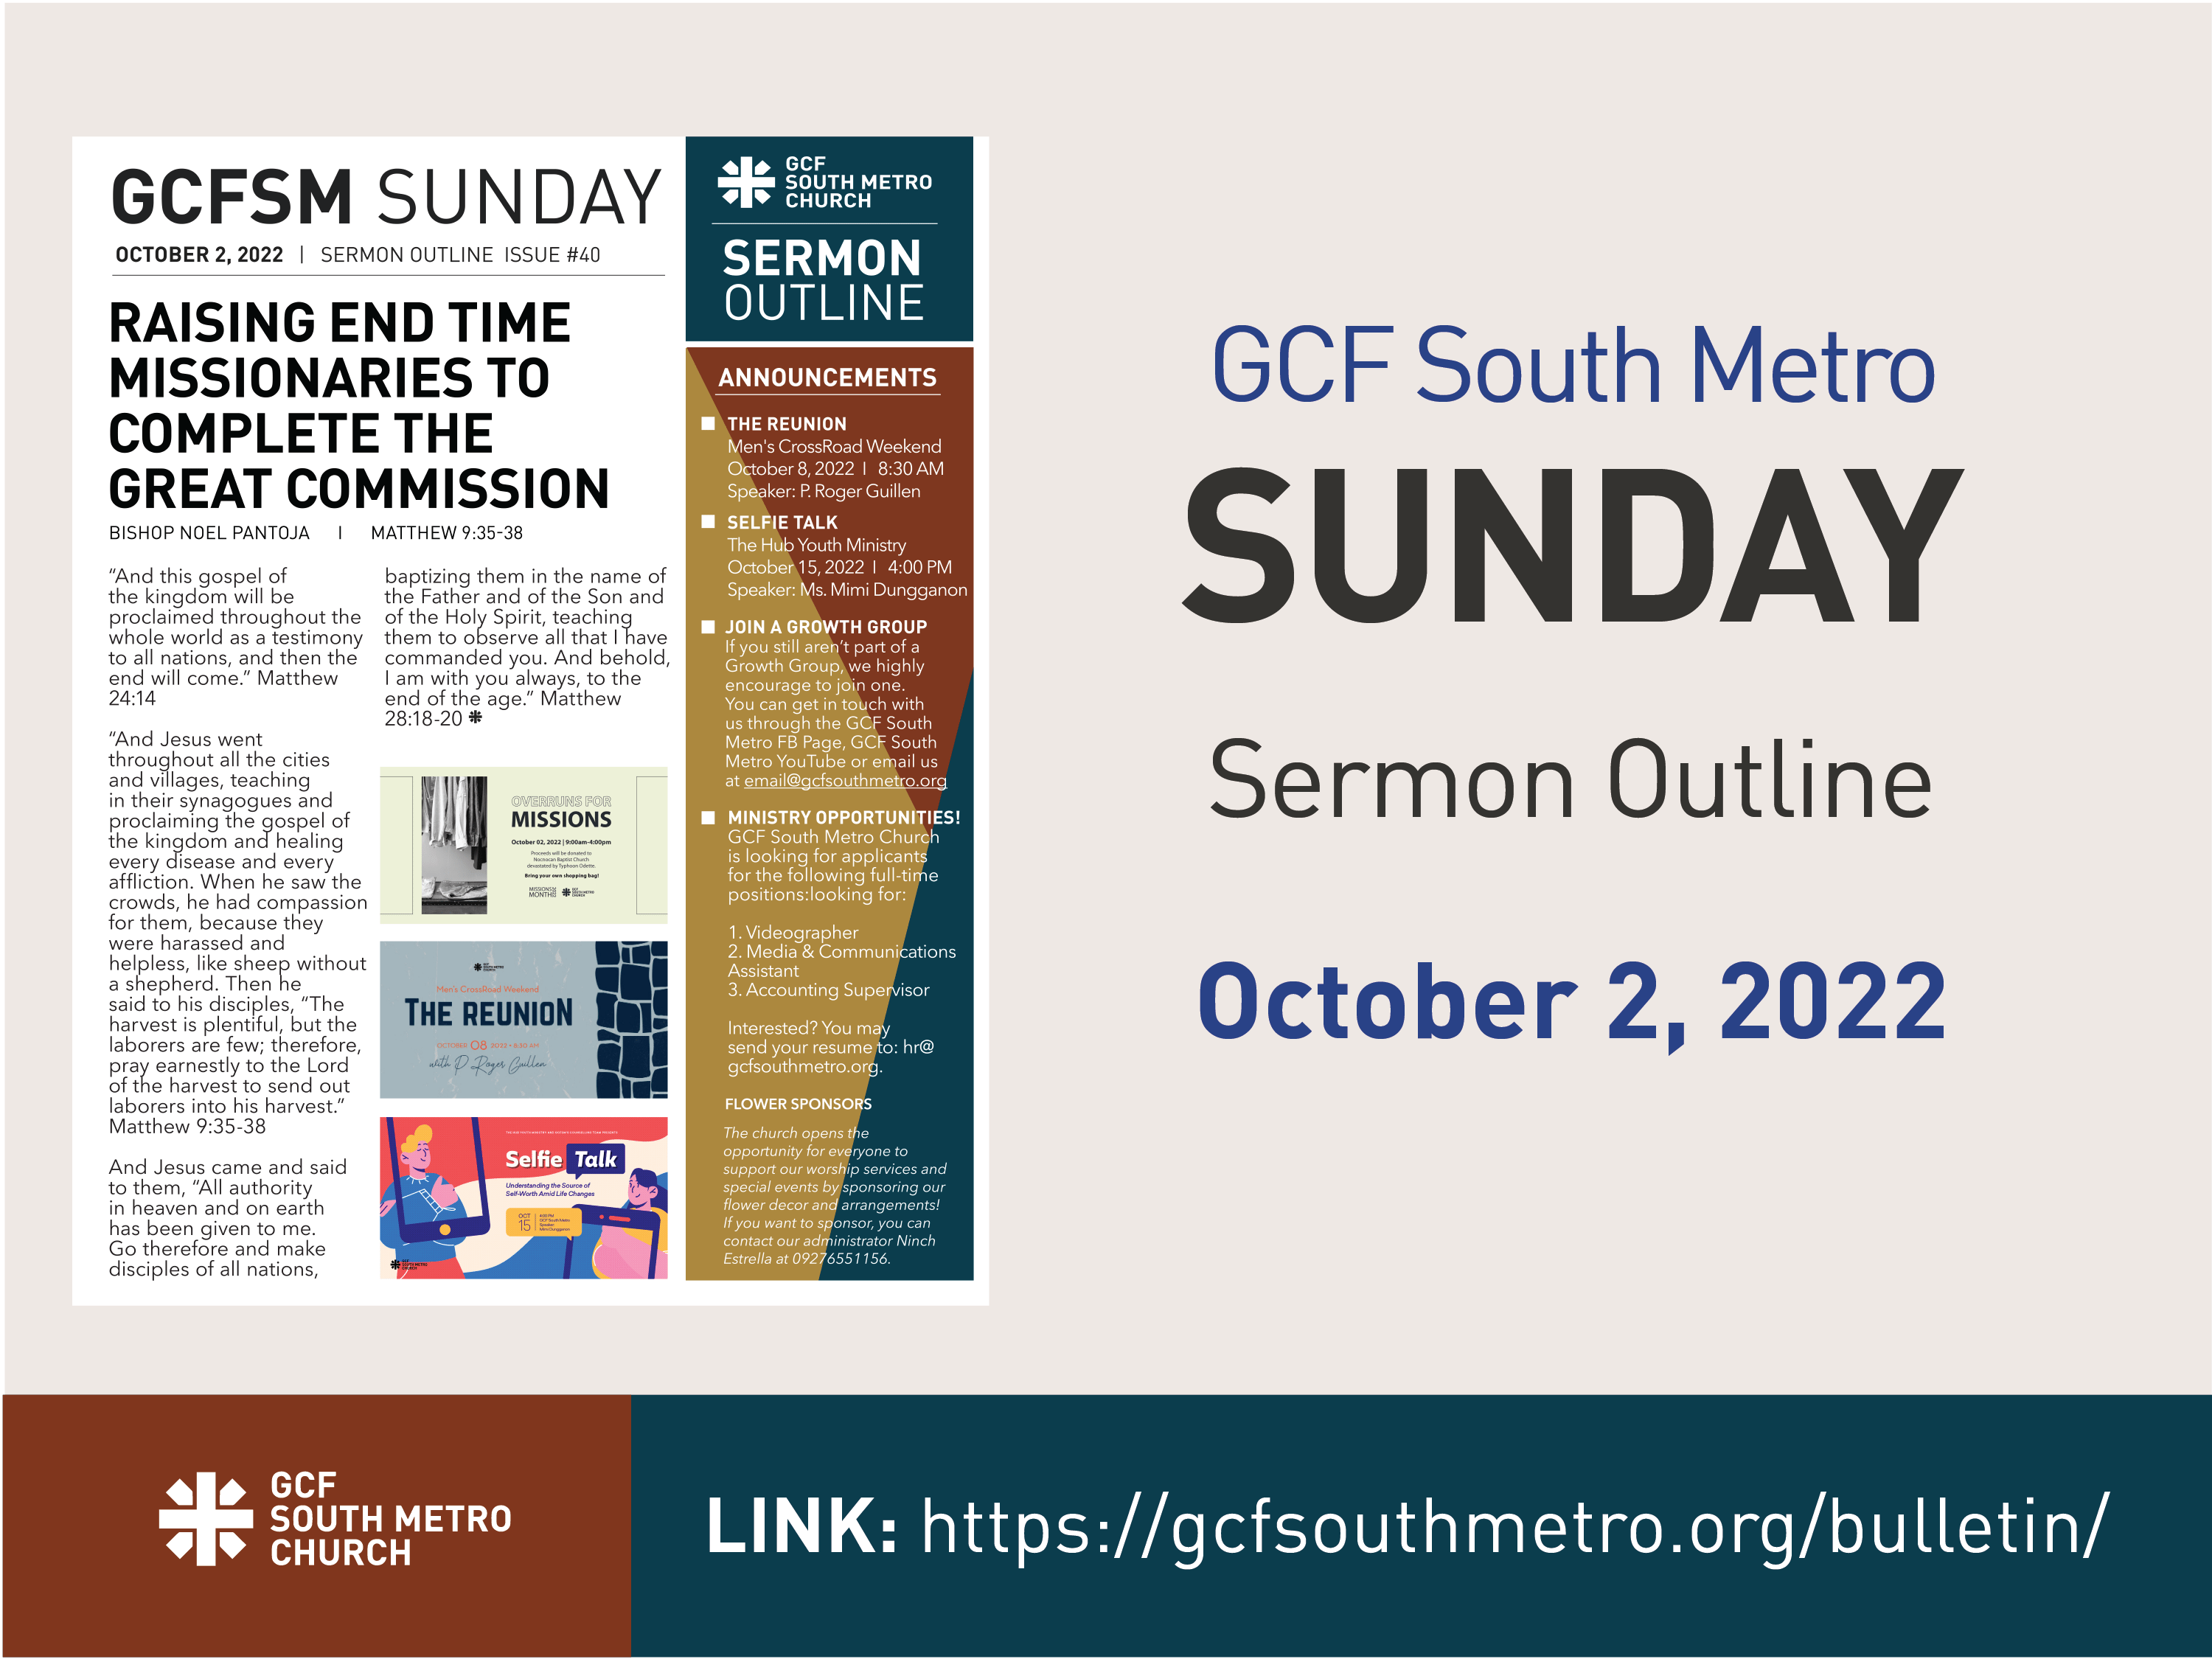 Sunday Bulletin – Sermon Outline, October 2, 2022